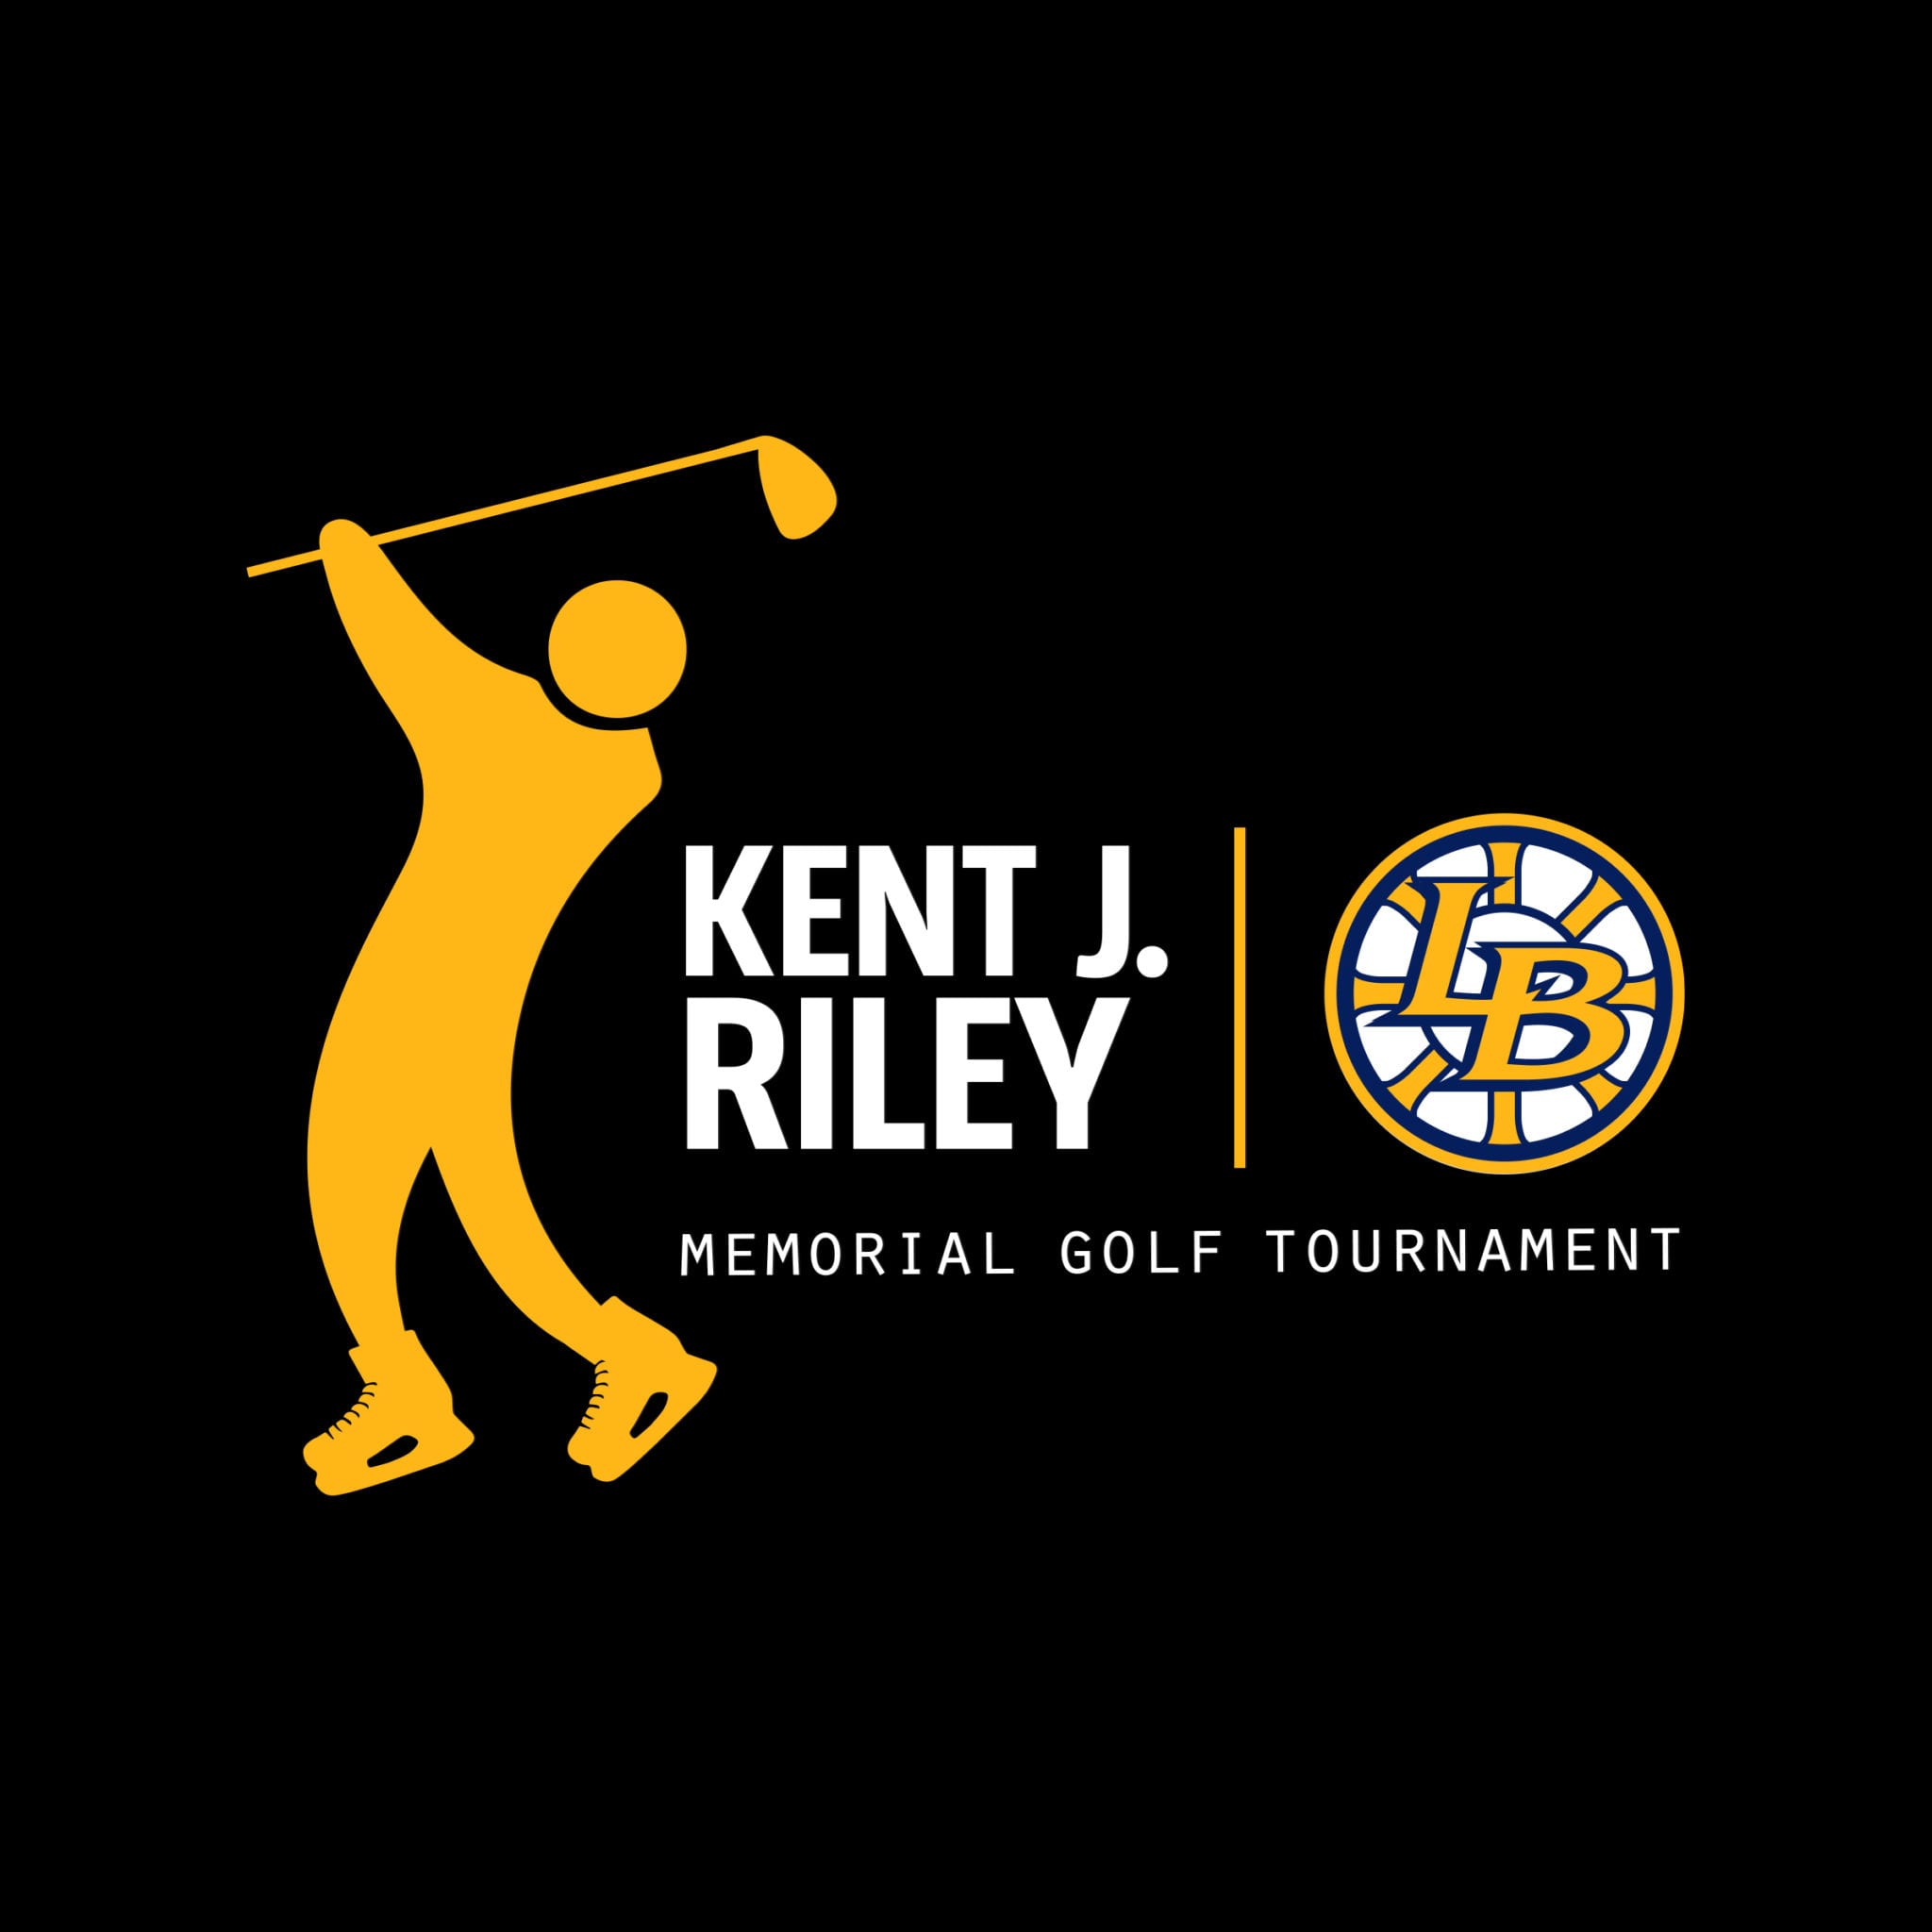 Kent J. Riley Memorial Golf Tournament